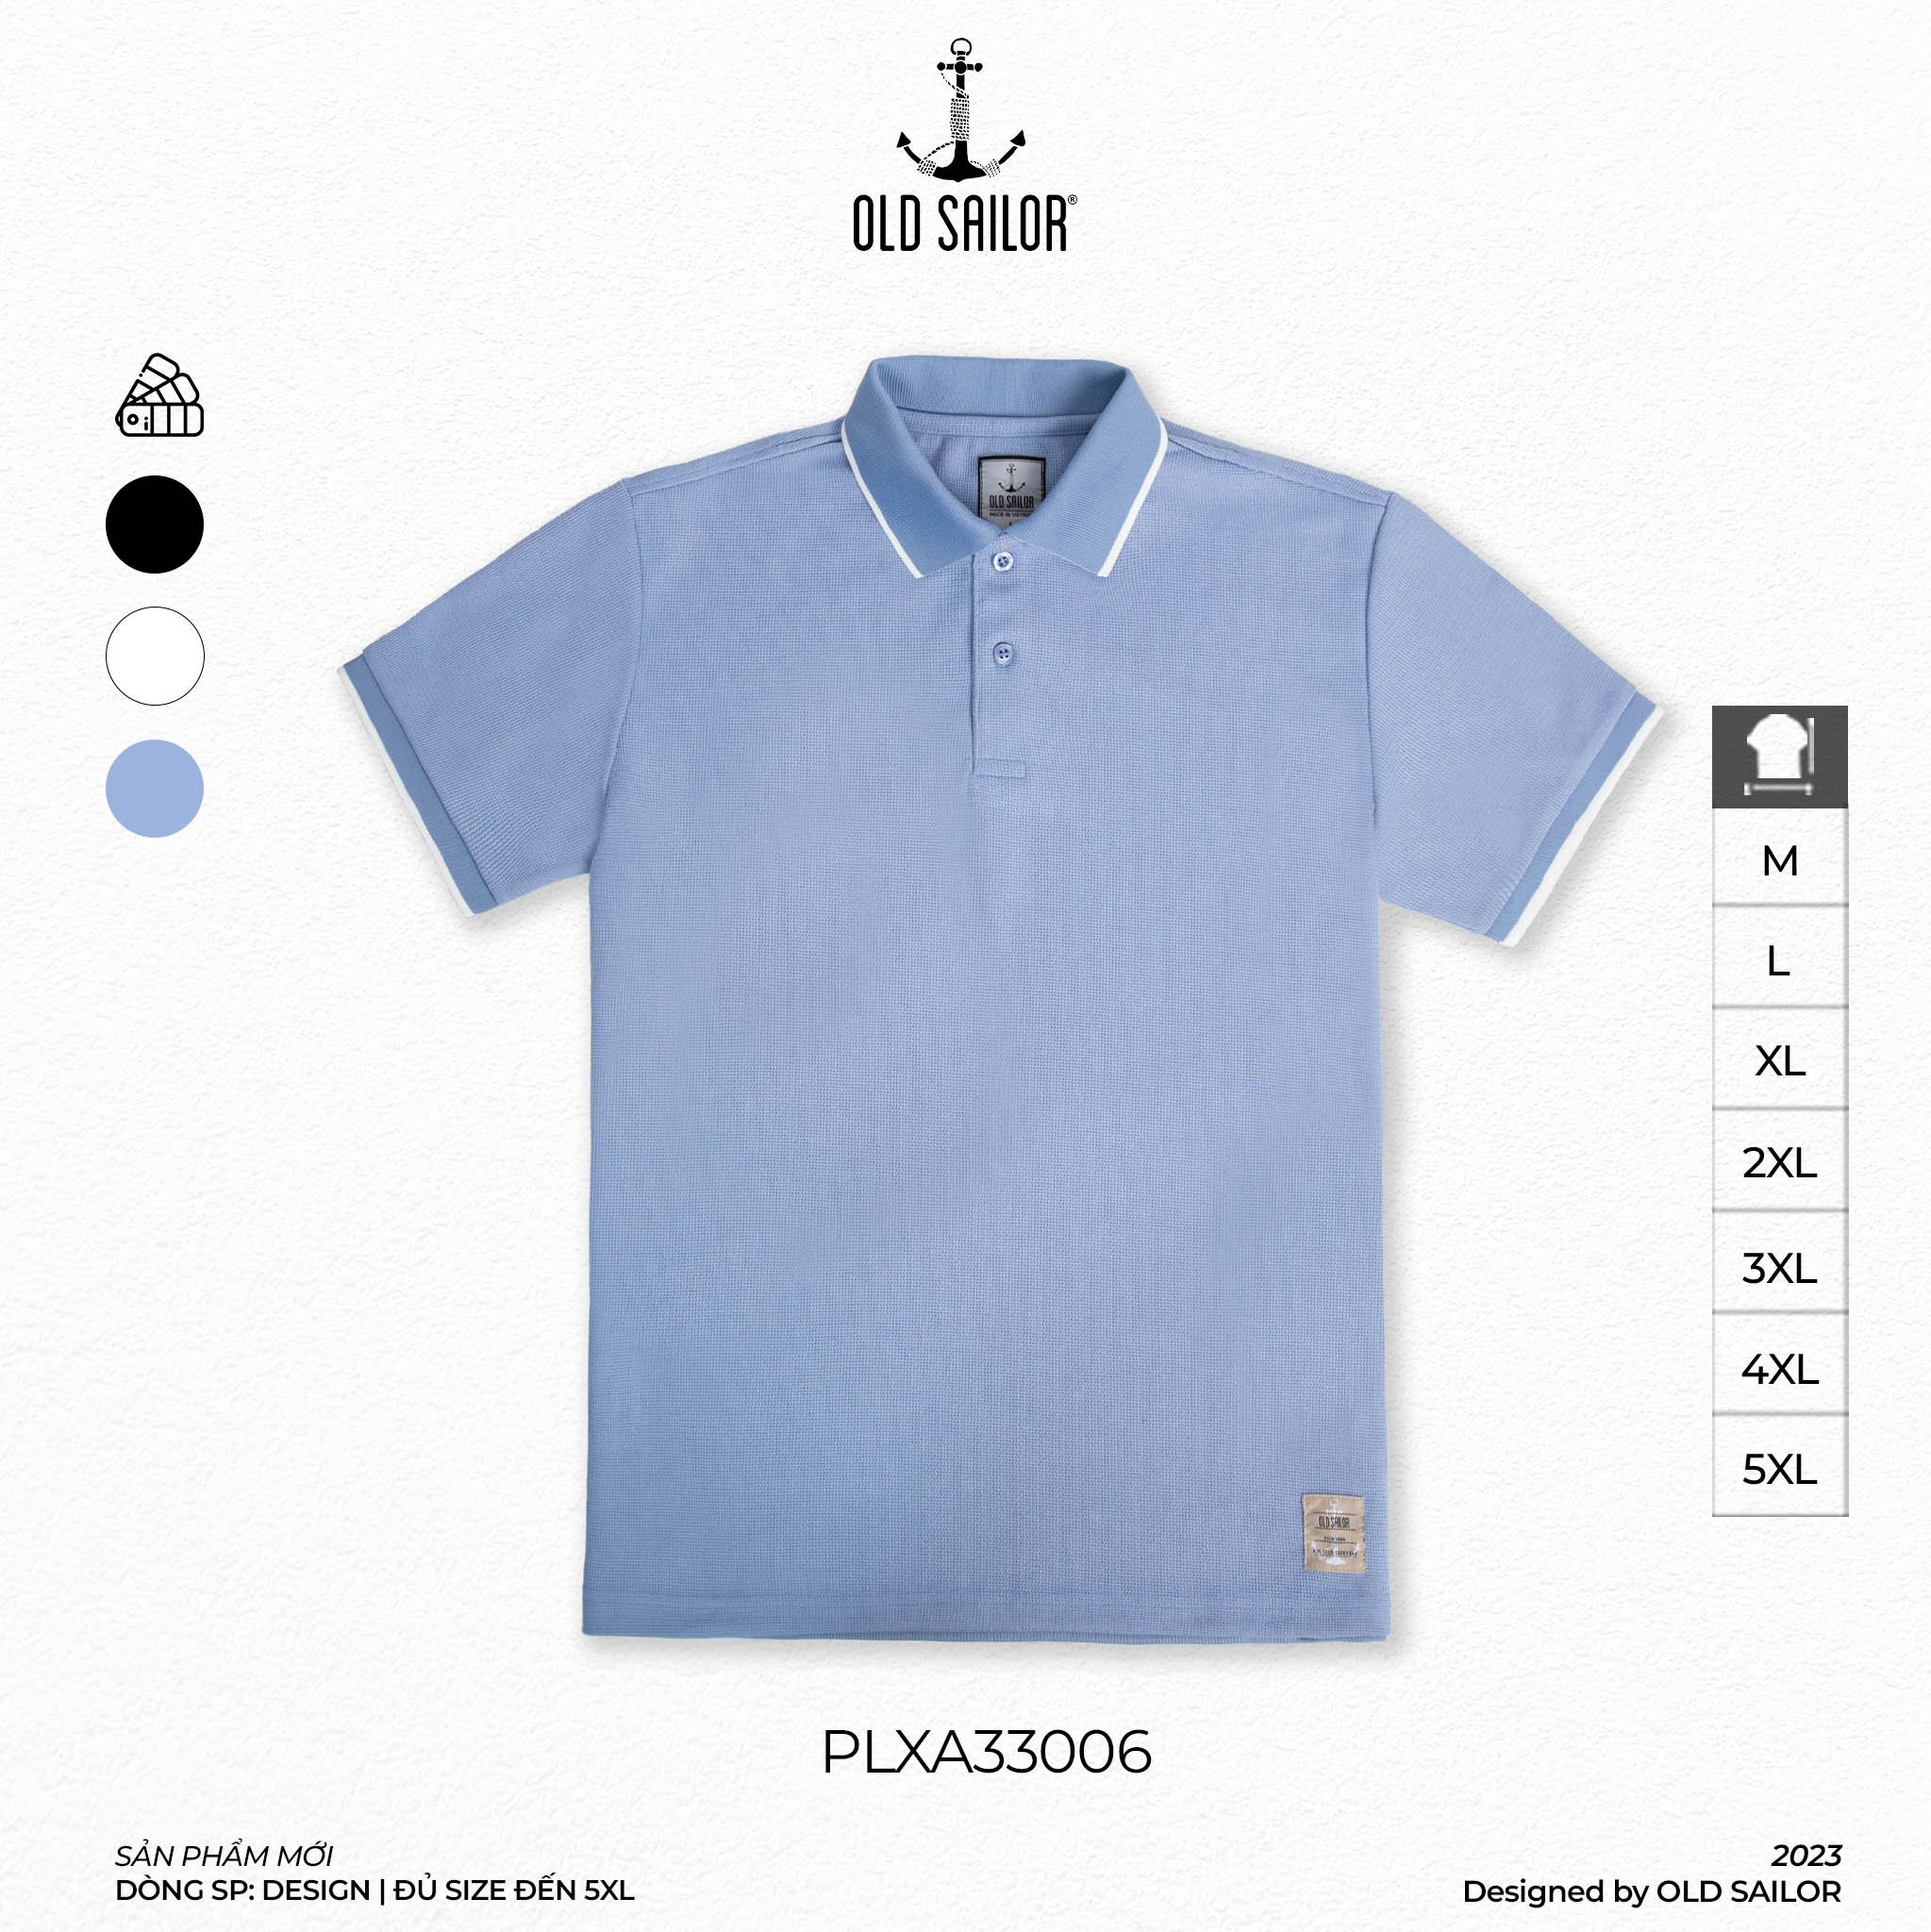 Áo polo vải dệt kim nam Old Sailor - Faded blue - PLXA33006 - xanh - Big size upto 5XL